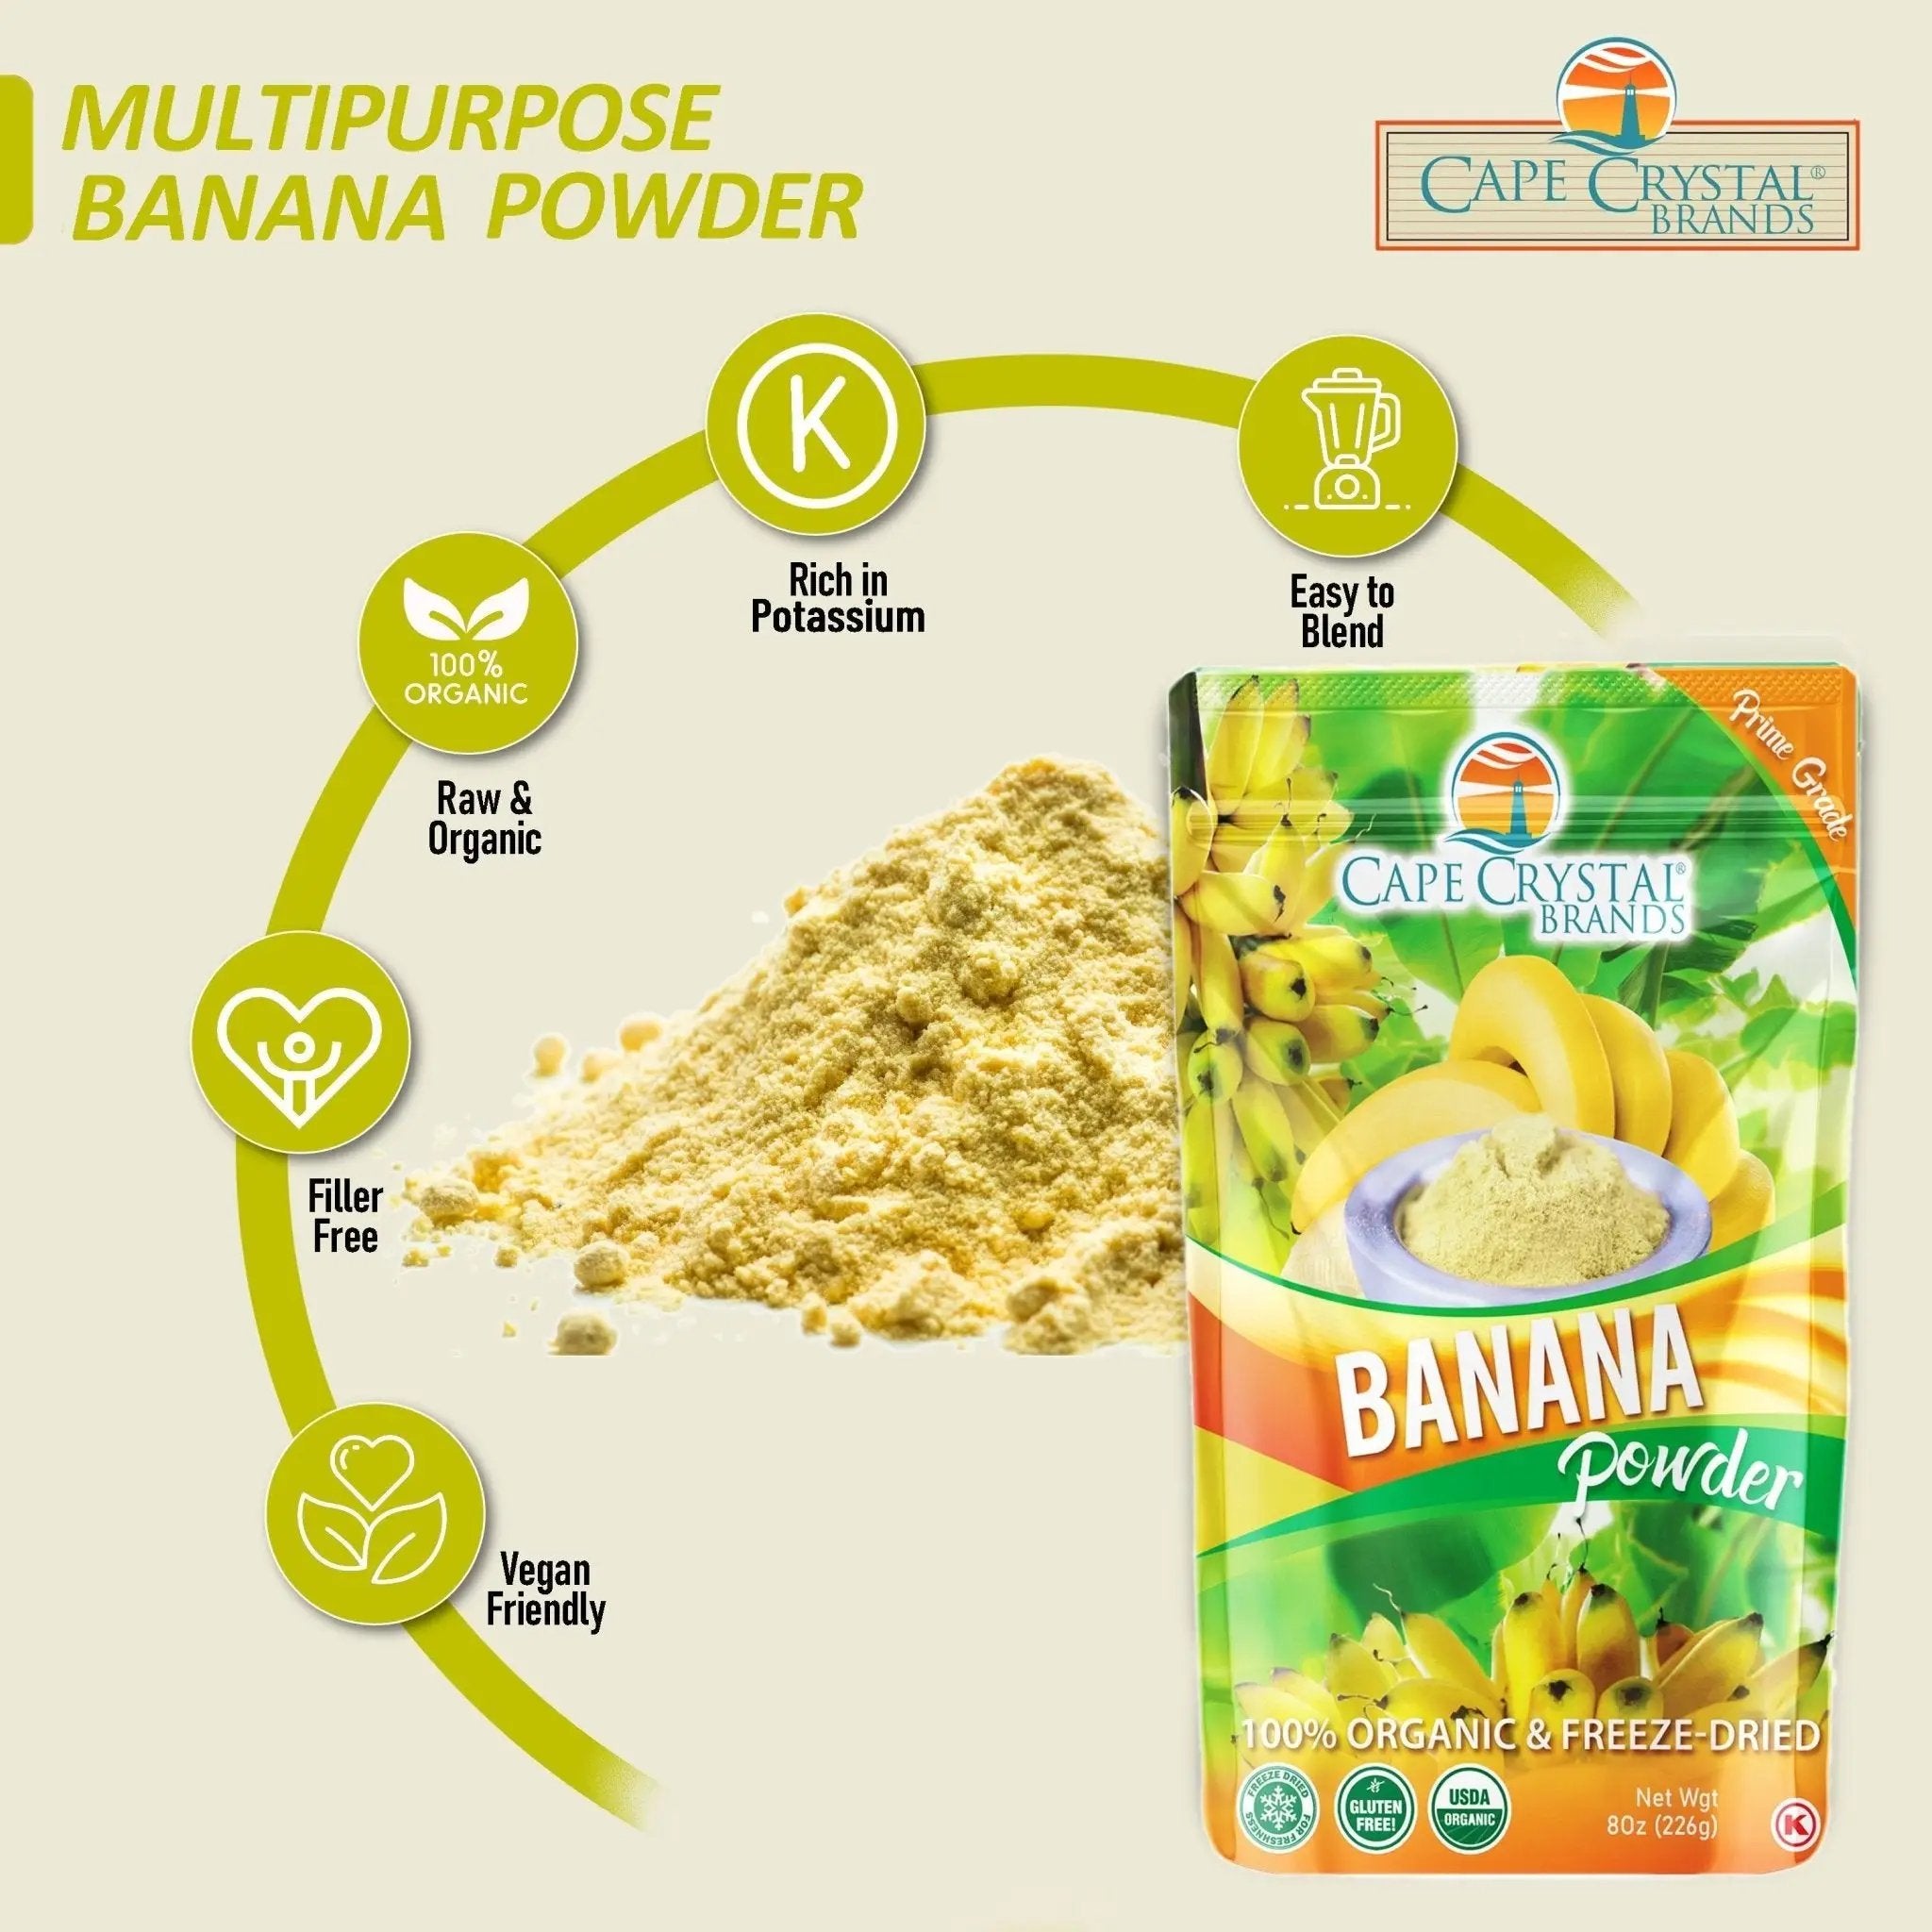 Cape Crystal Banana Powder Goodness – 8-oz., Freeze-Dried for Superior Taste, USDA Certified Organic, Non-GMO, Gluten Free, Vegan - Cape Crystal Brands